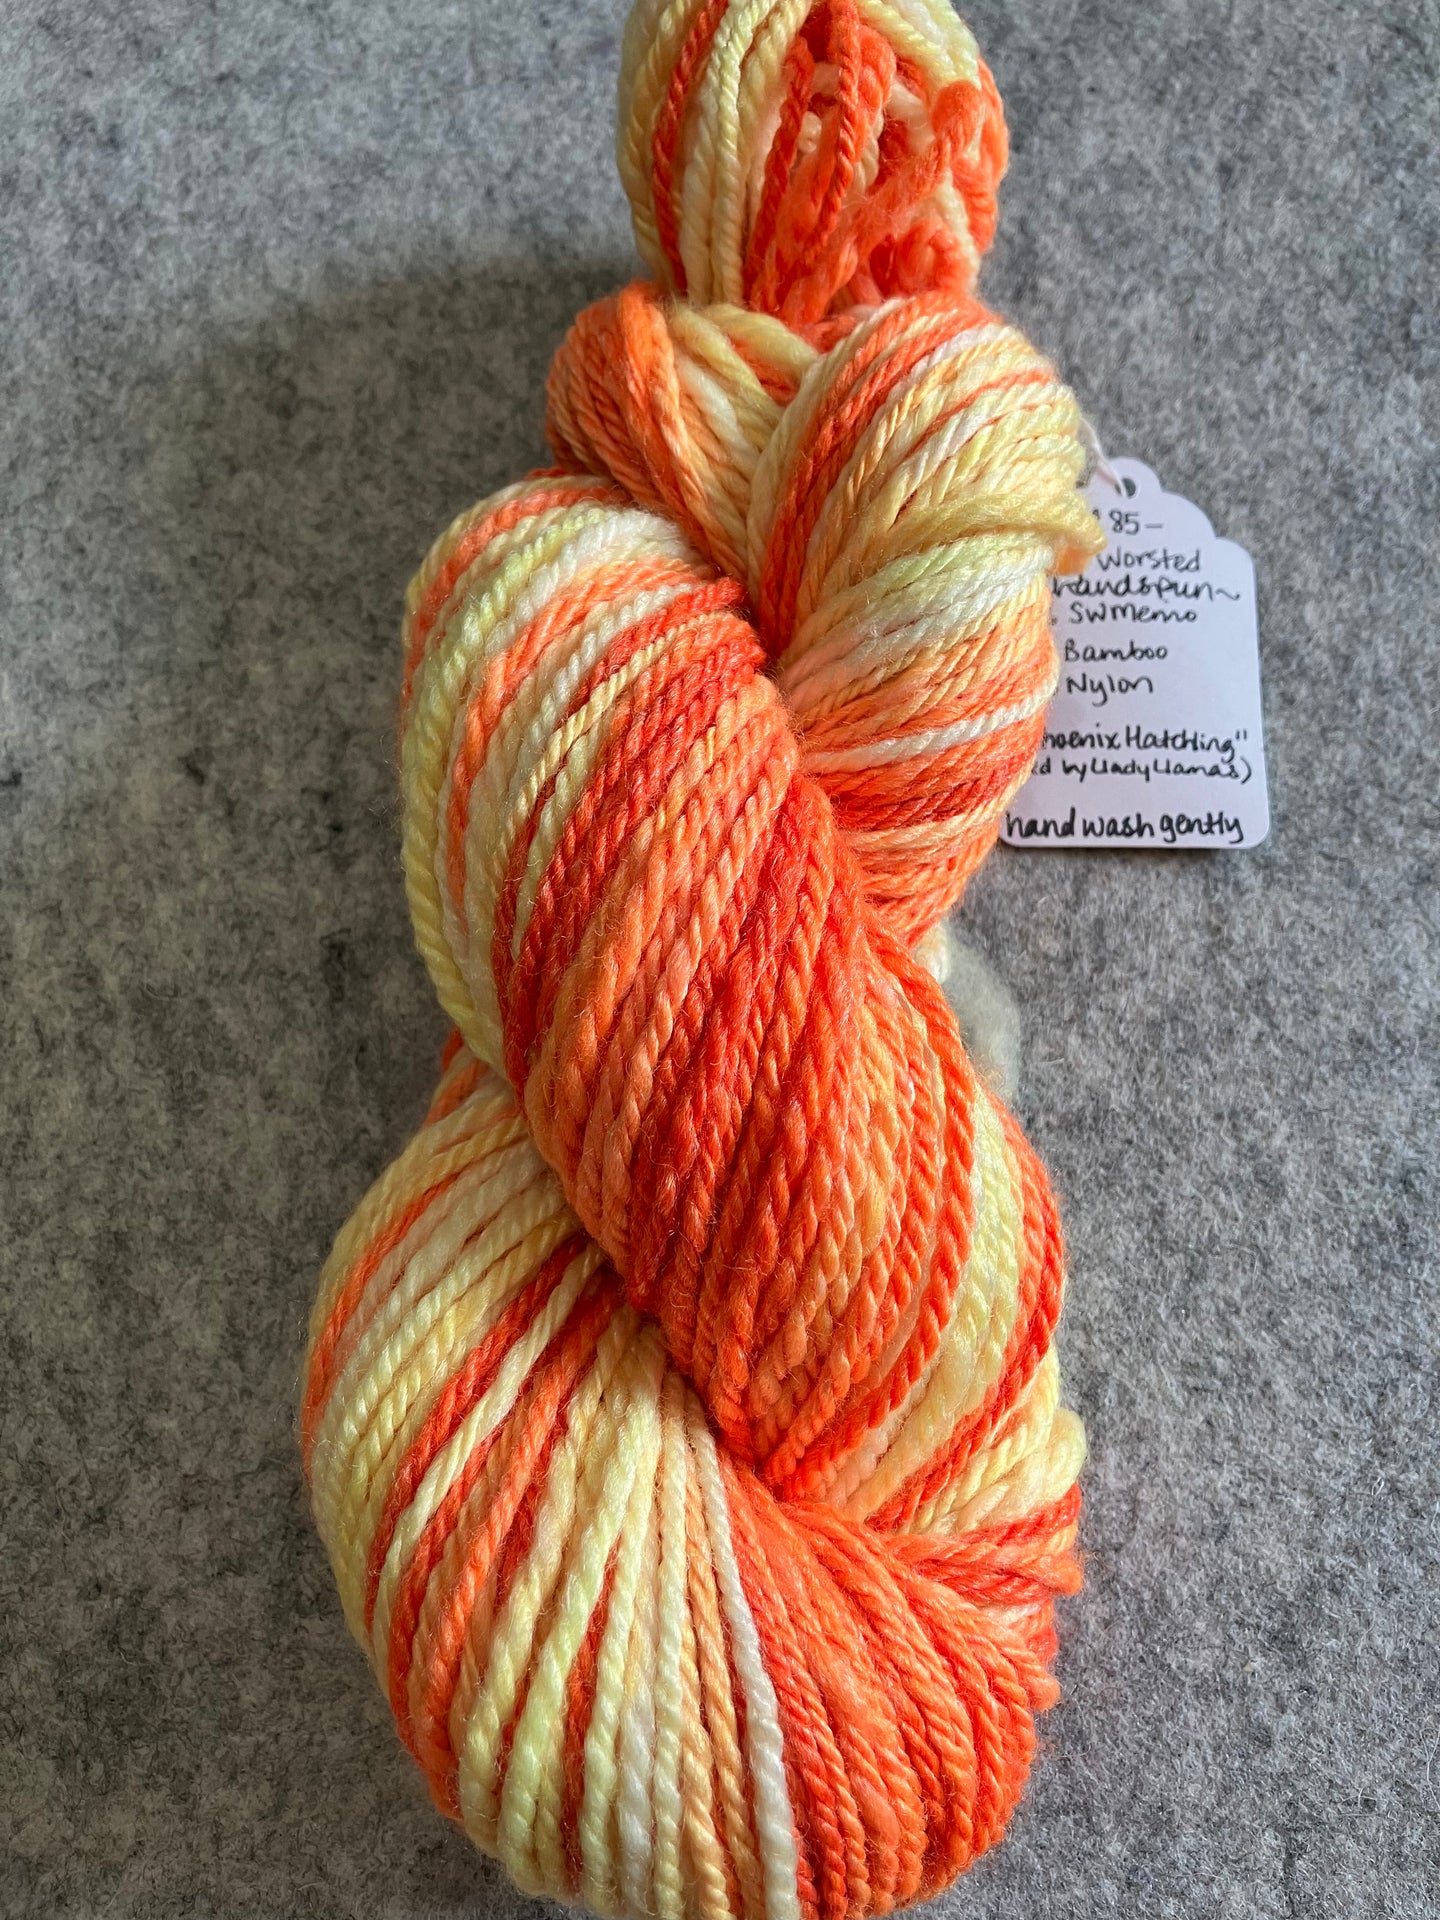 Phoenix Hatchling handspun yarn